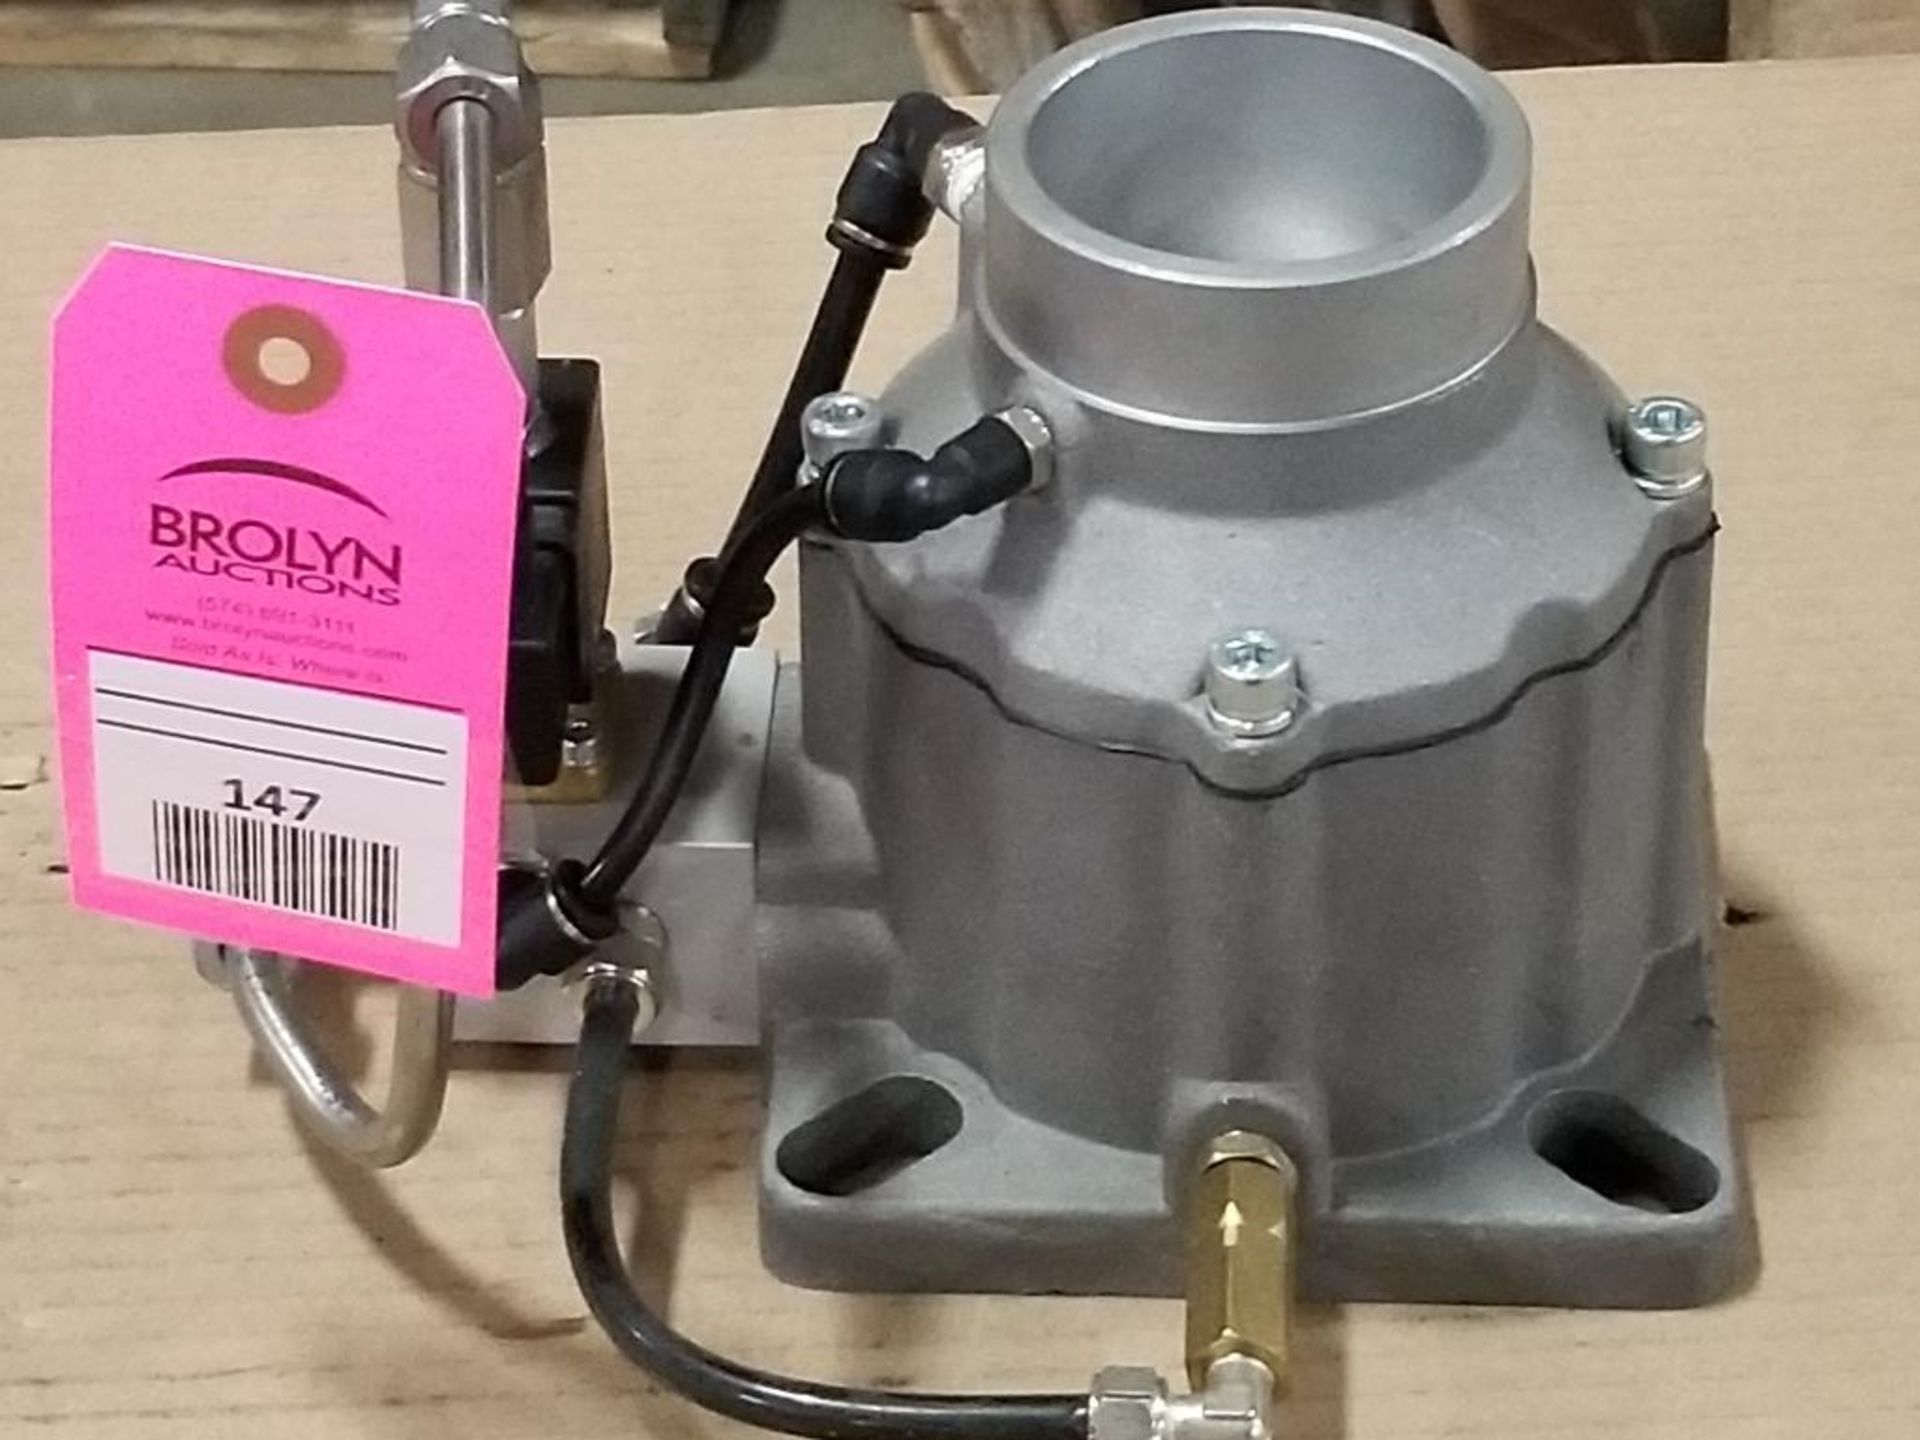 AIV-65C-S Intake valve. Max pressure - 15BAR. New no box.